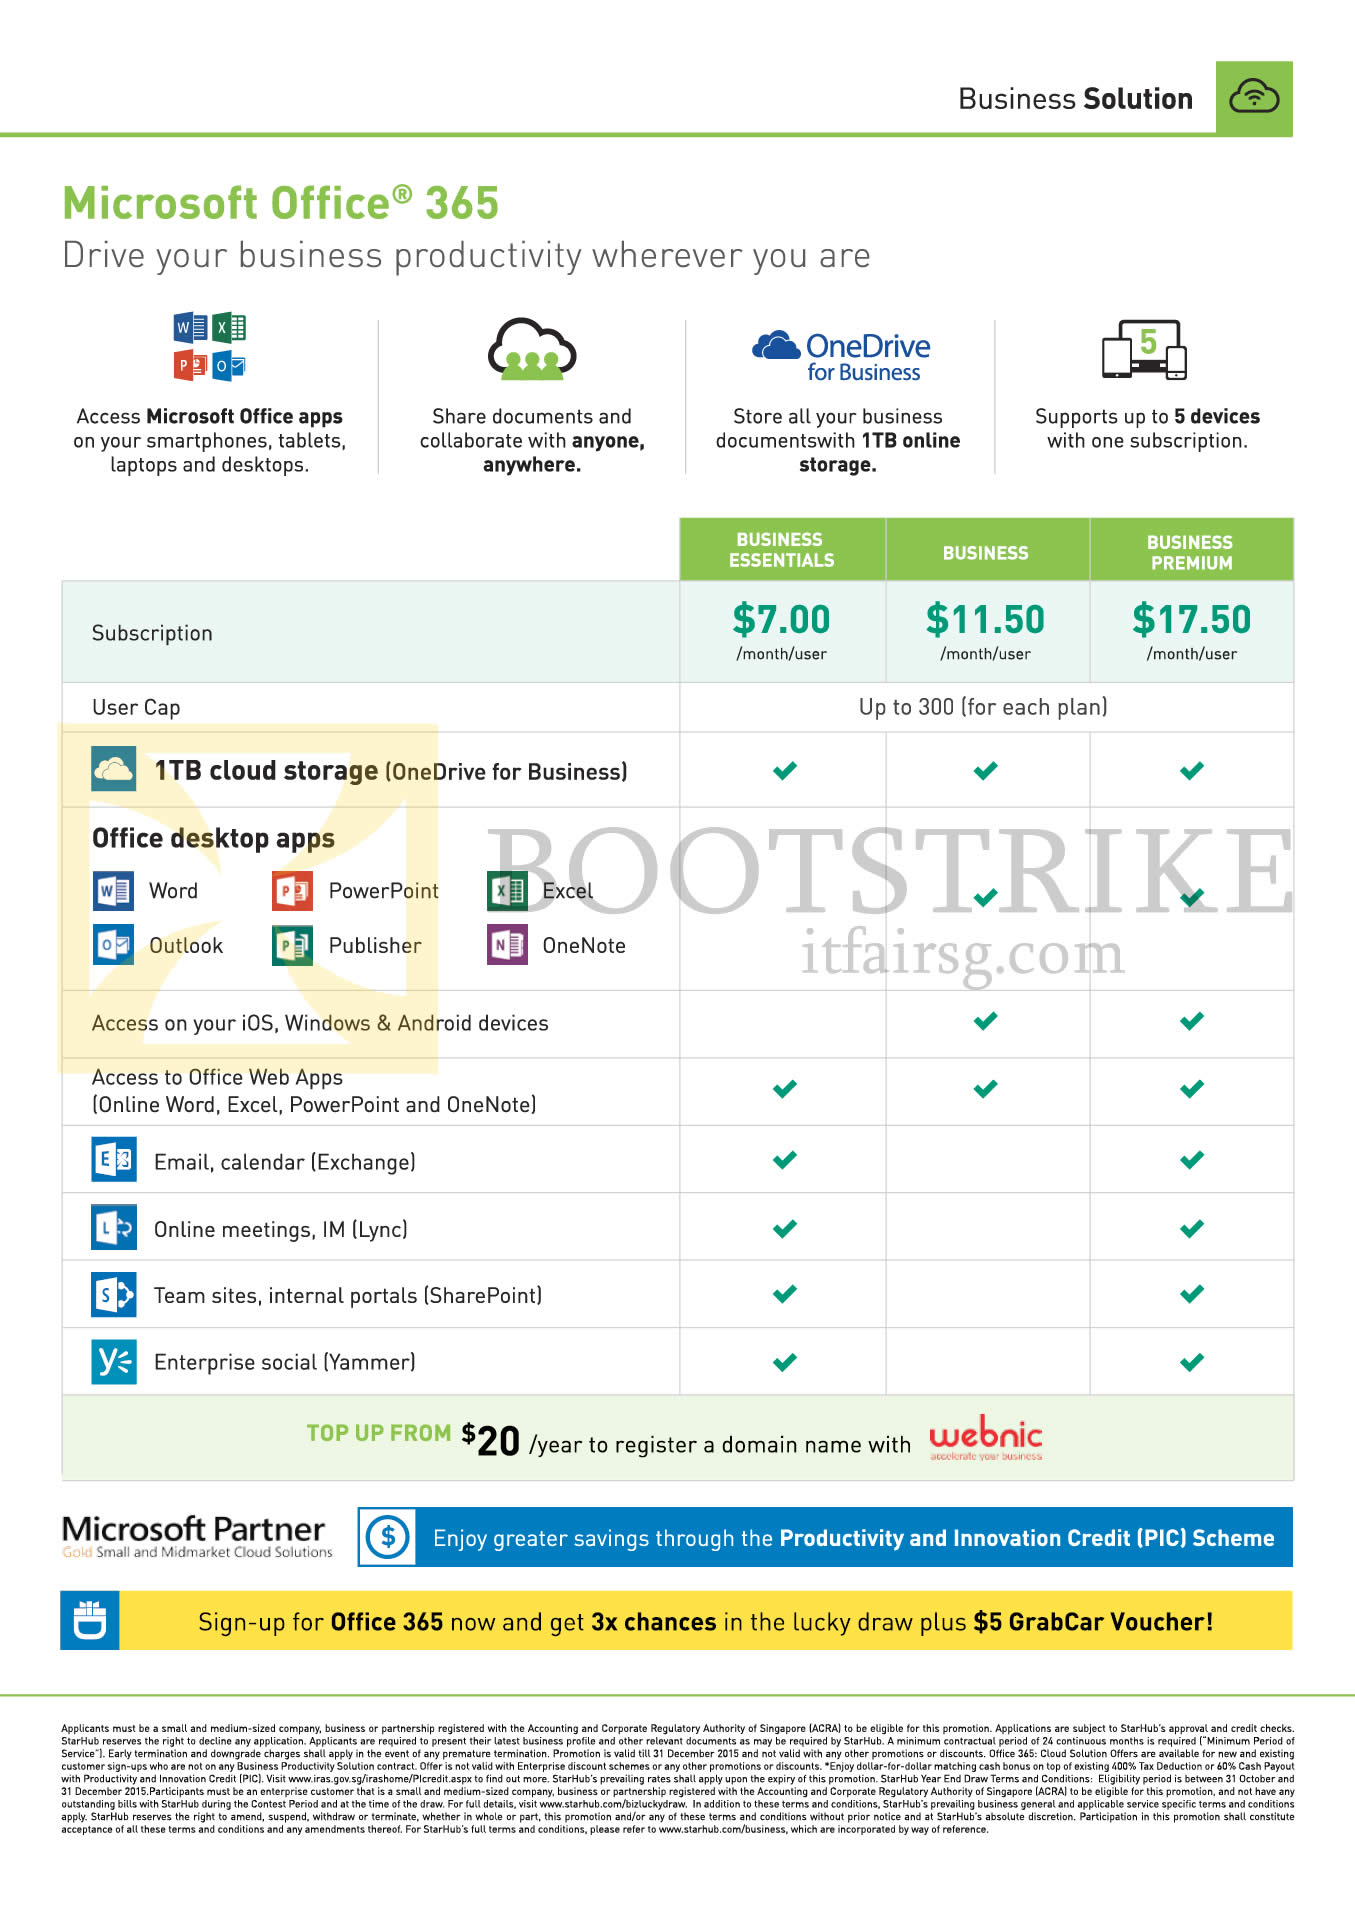 SITEX 2015 price list image brochure of Starhub Business Microsoft Office 365 7.00 Business Essentials, 11.50 Business, 17.50 Business Premium